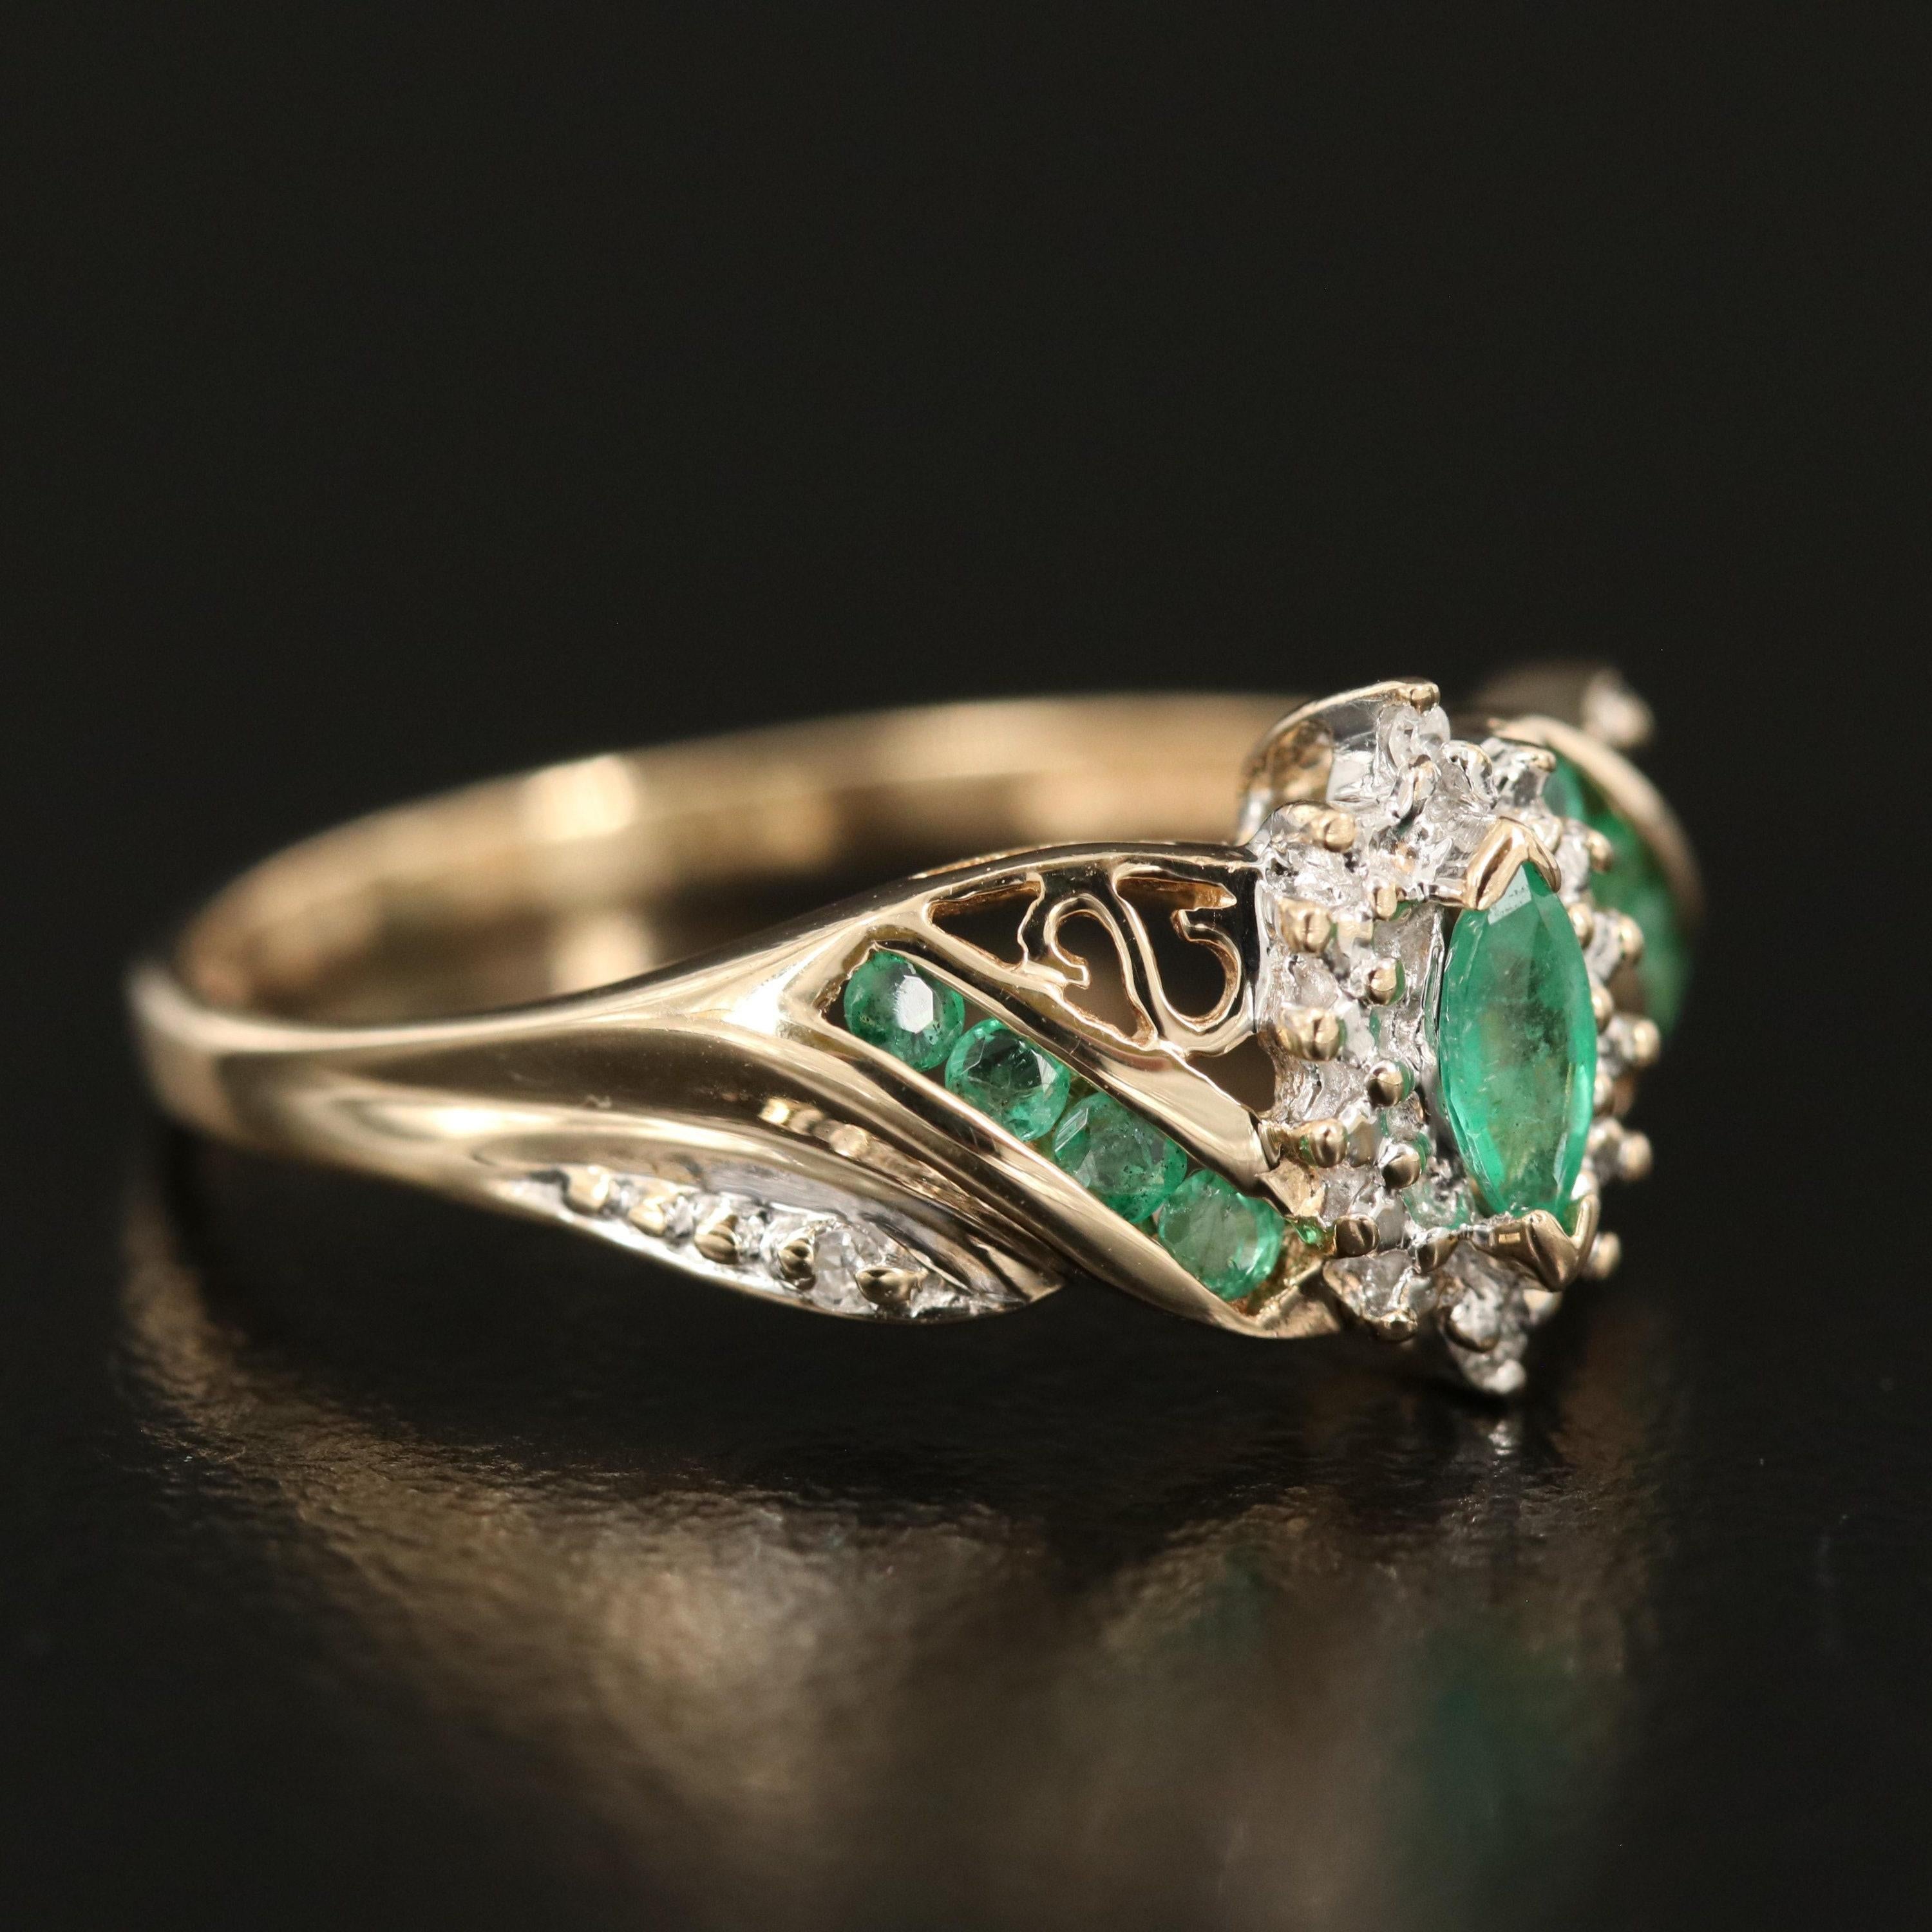 For Sale:  1.5 Carat Marquise Cut Emerald Diamond Bridal Ring Diamond Emerald Cocktail Ring 6